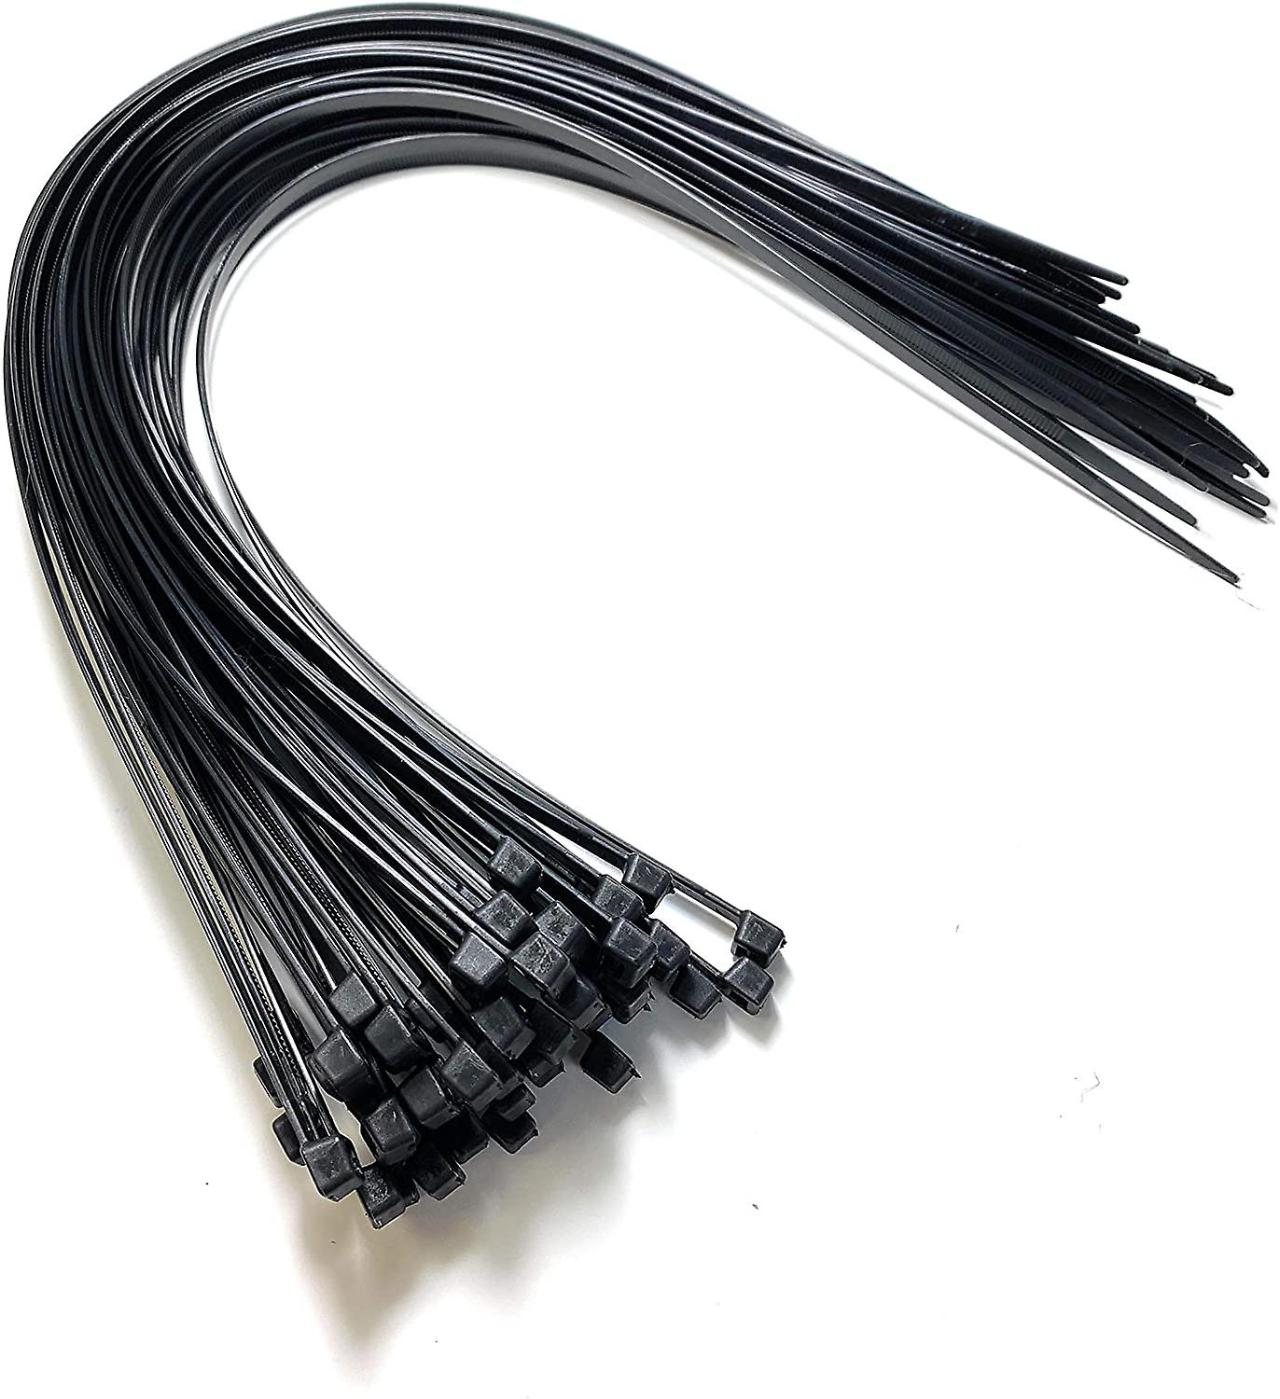 Cable tie black 2.5 x 75mm